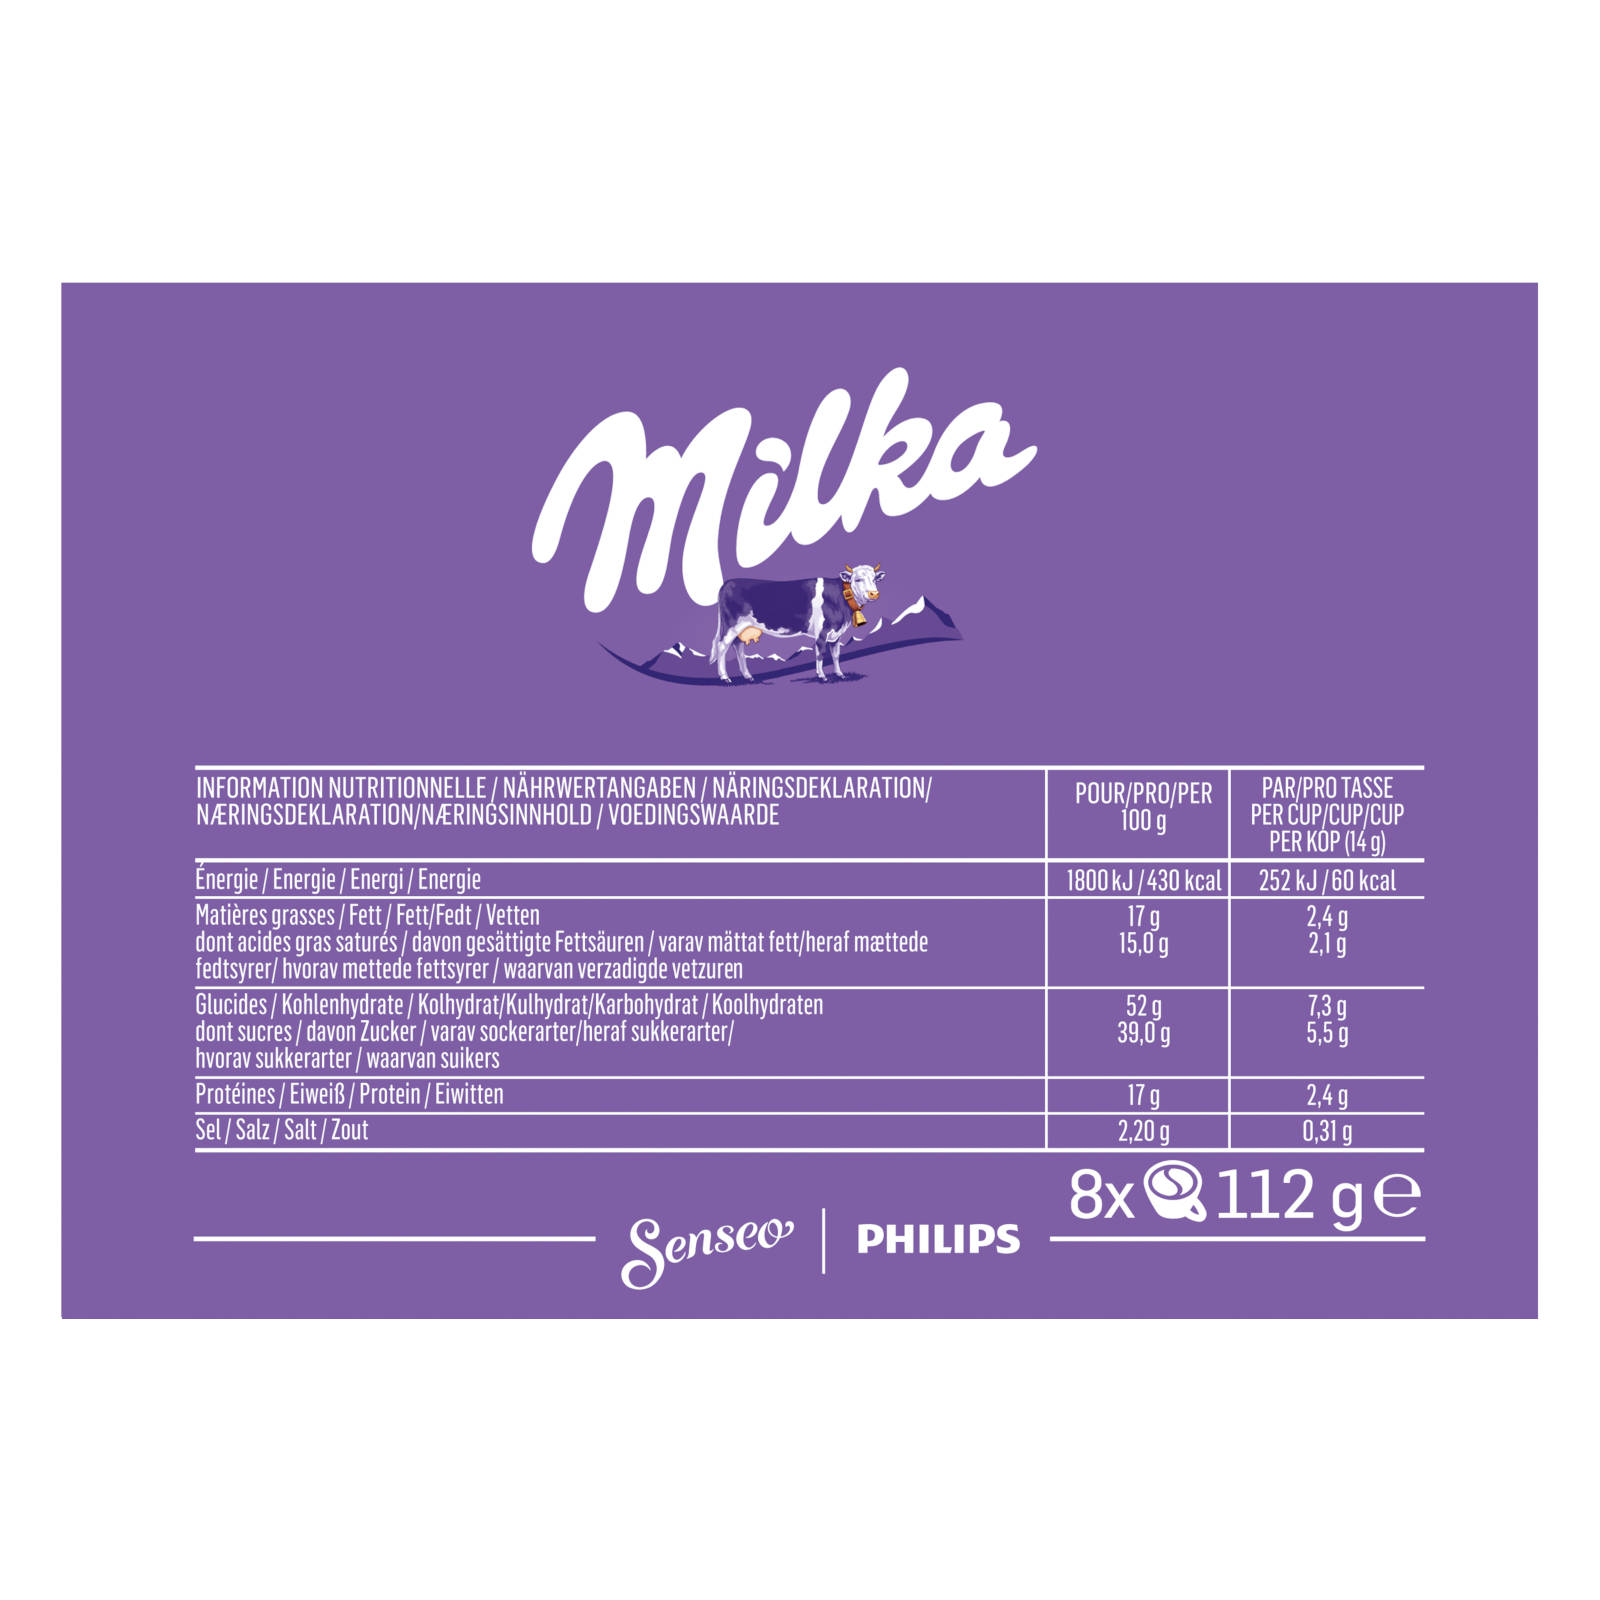 Schokolade Kakao (Senseo Kakaopads Soft- Hot Pad-Maschine) Choco Getränke Milka heisse SENSEO 80